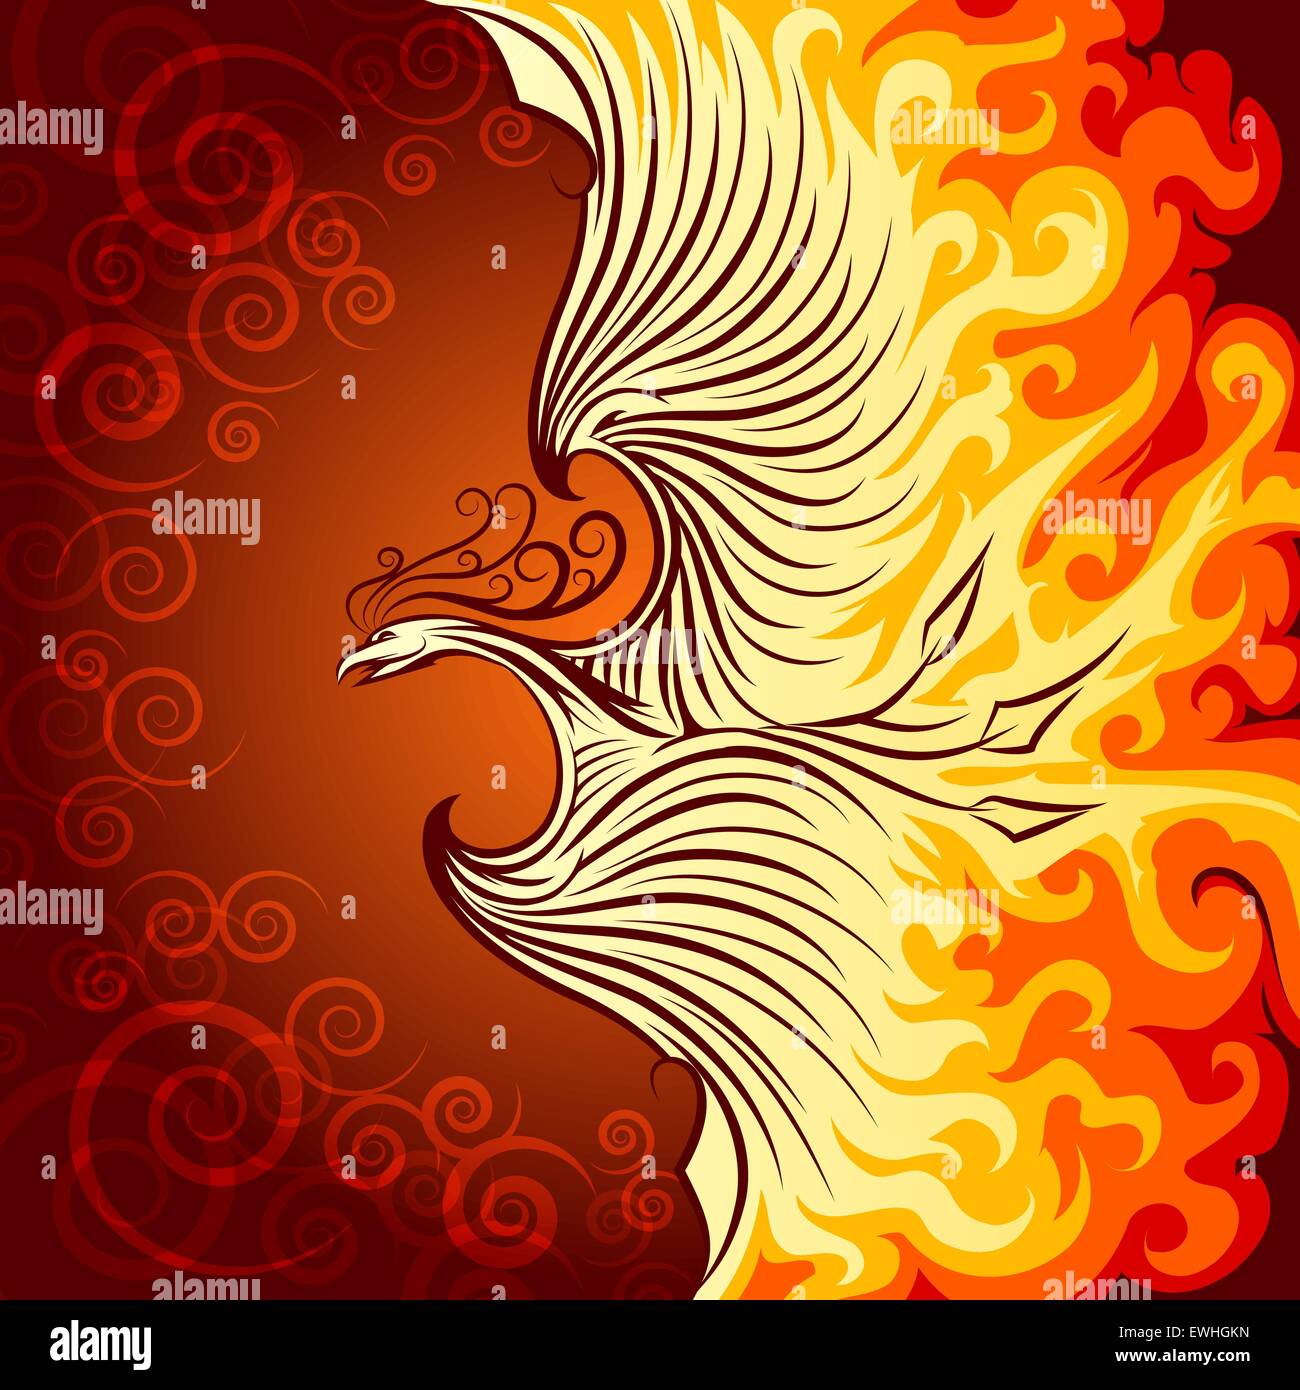 Decorative illustration of flying phoenix bird. Phoenix in burning flame. Stock Vector